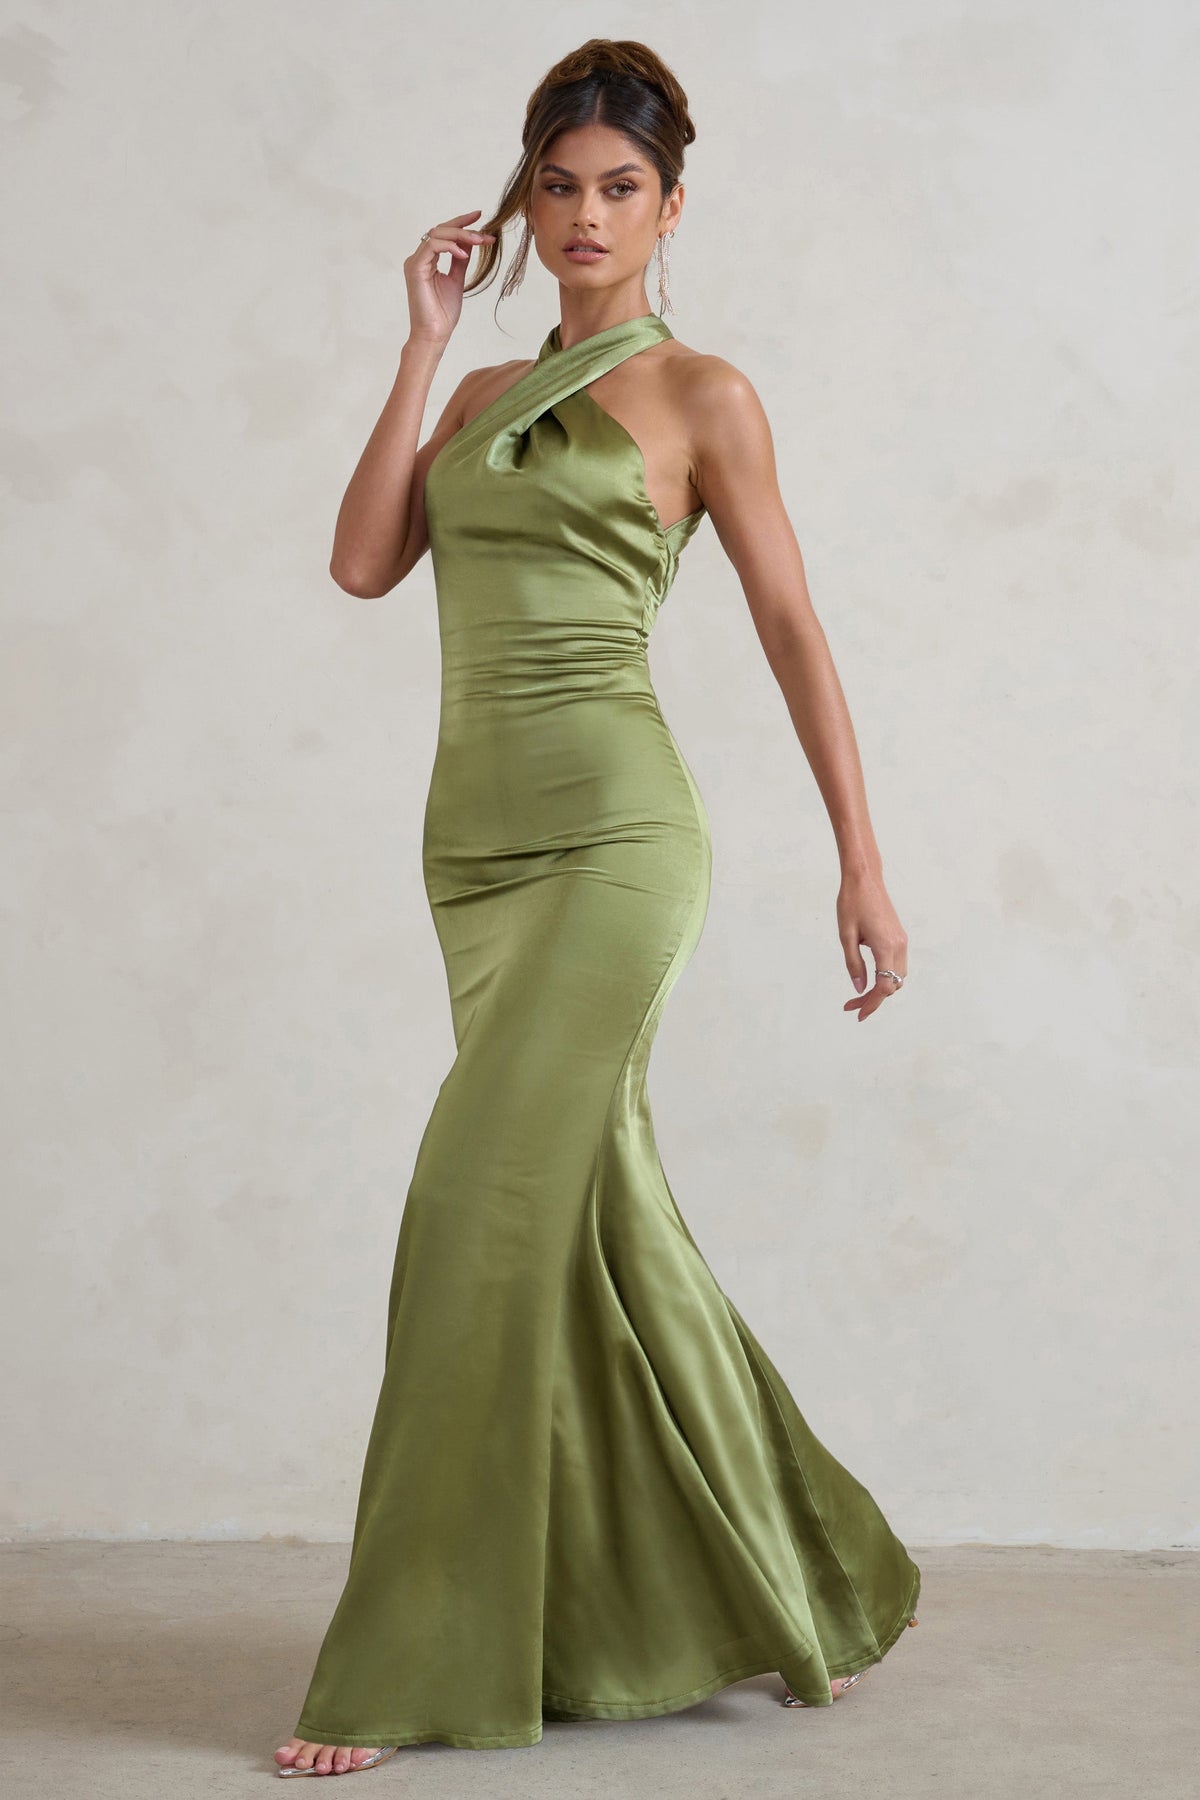 olive green satin dress